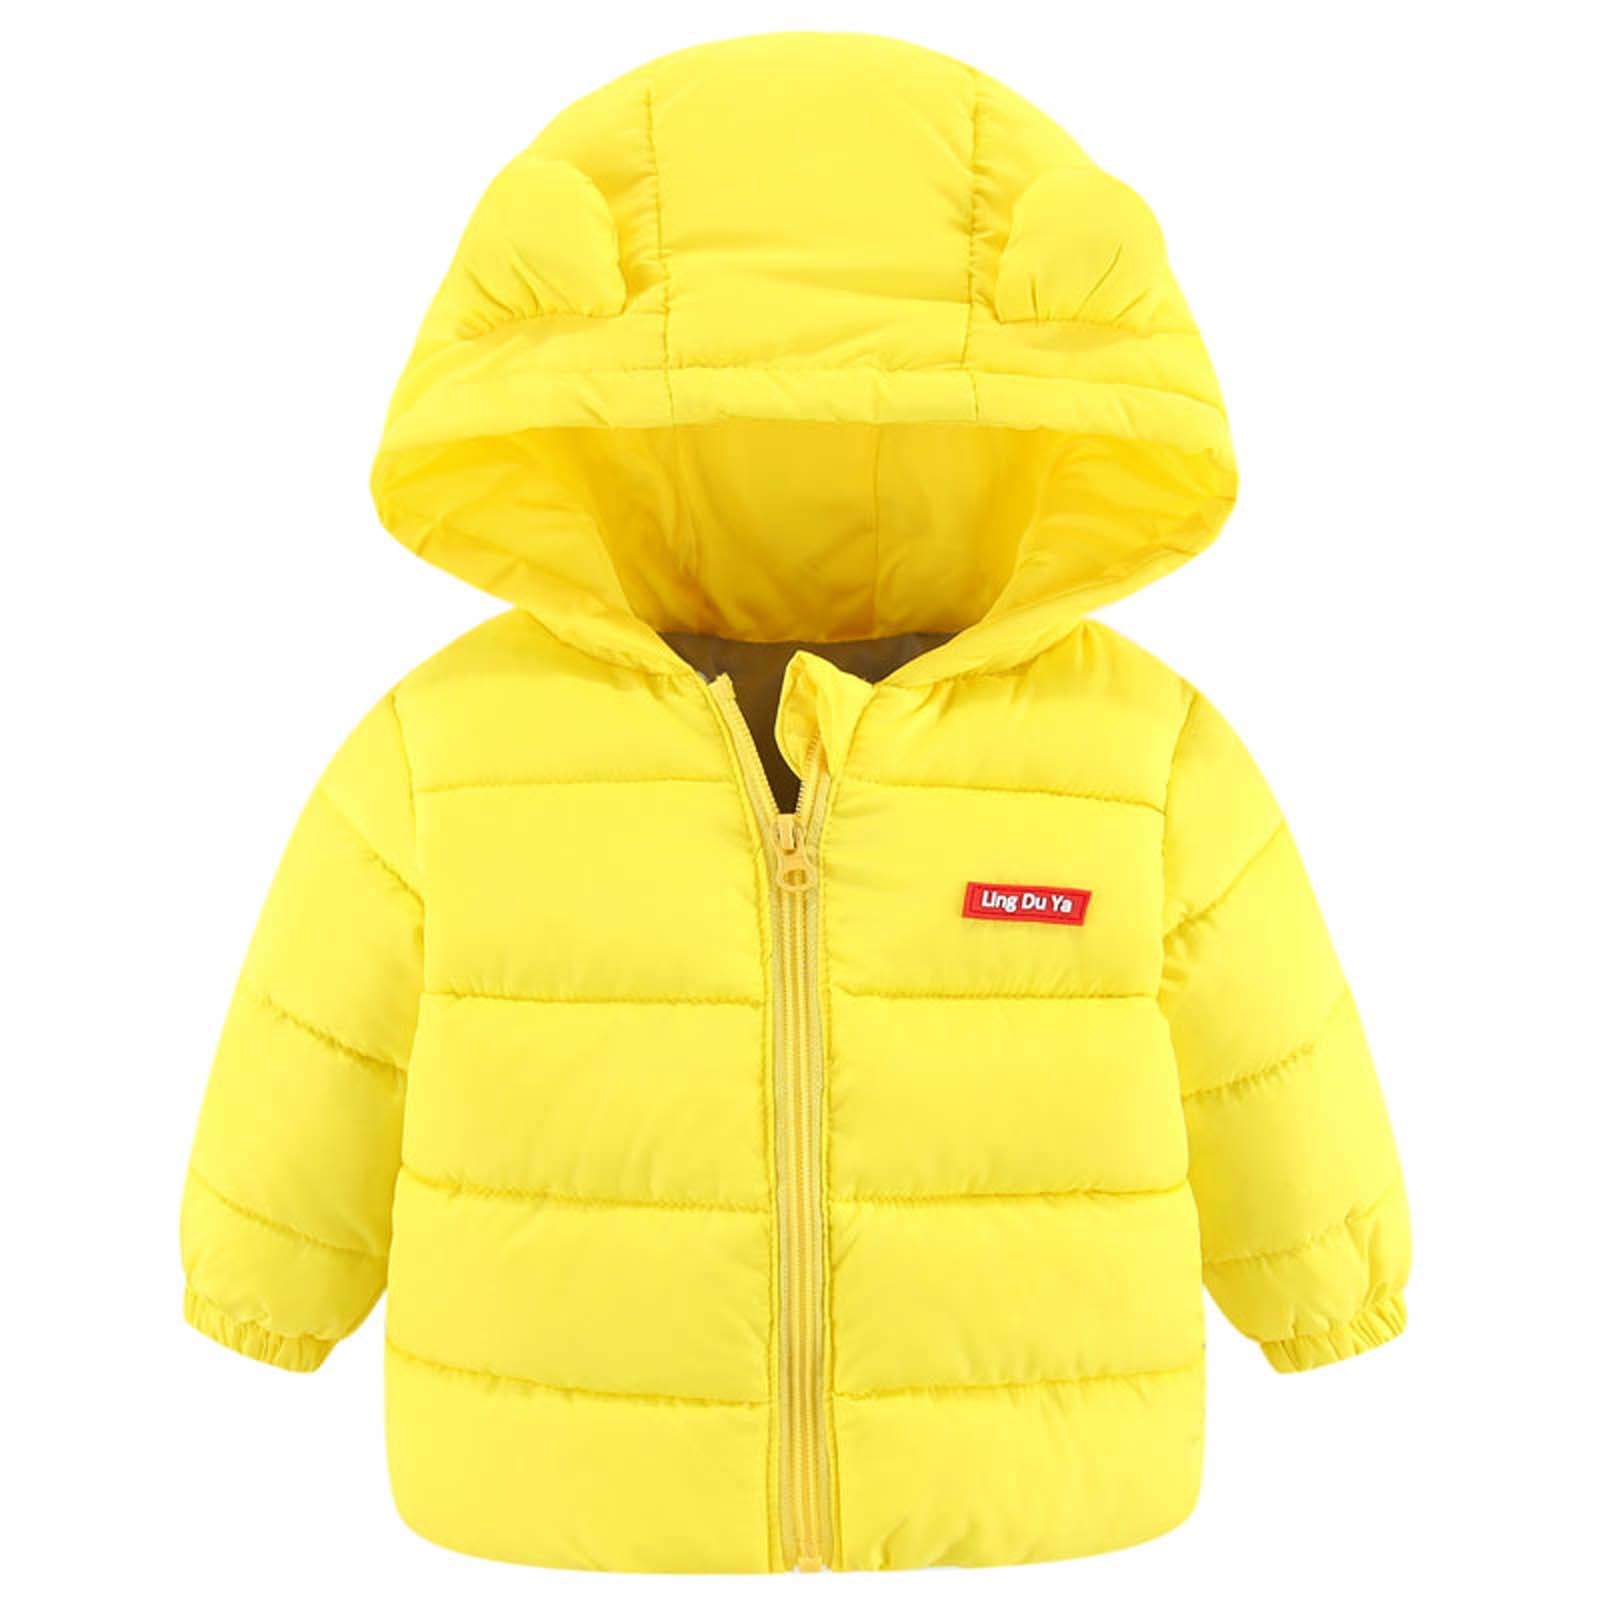 Kid Baby Winter Cartoon Dinosaur Coat Hooded Jacket Warm Outerwear Tops Colorful 